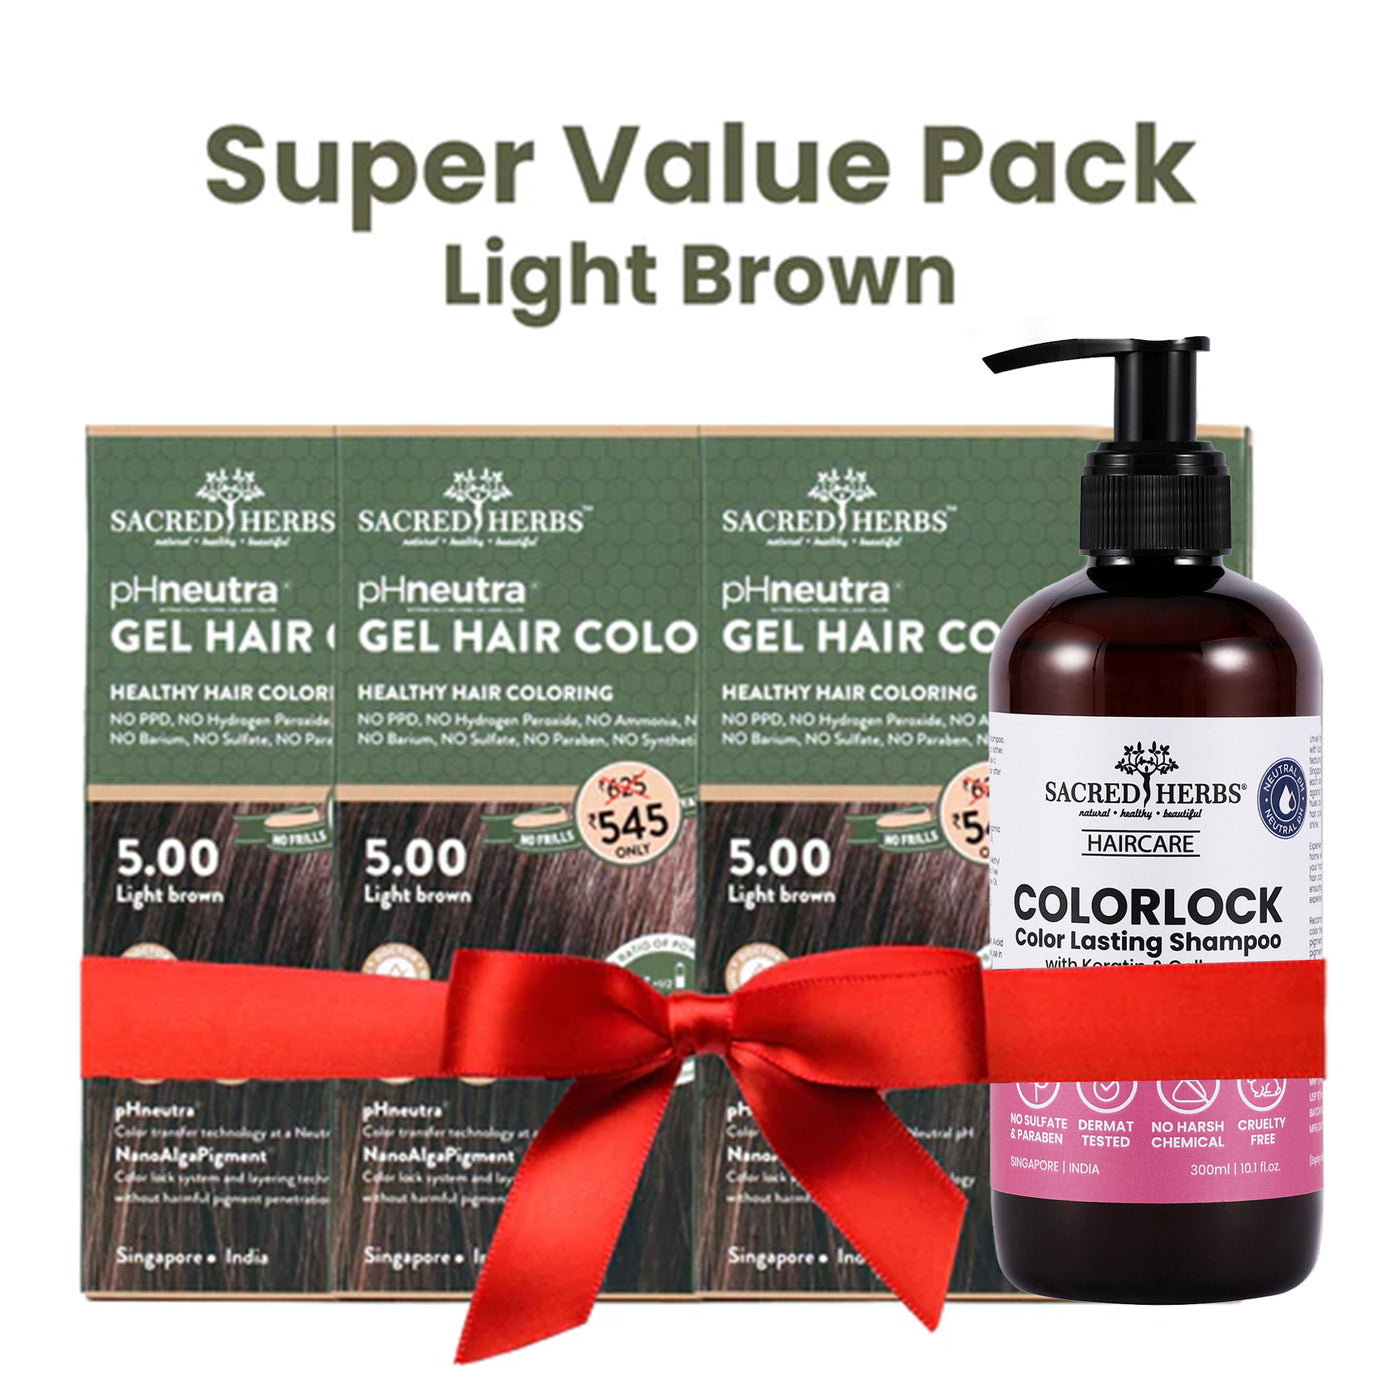 Super Value Pack Light Brown Hair Color